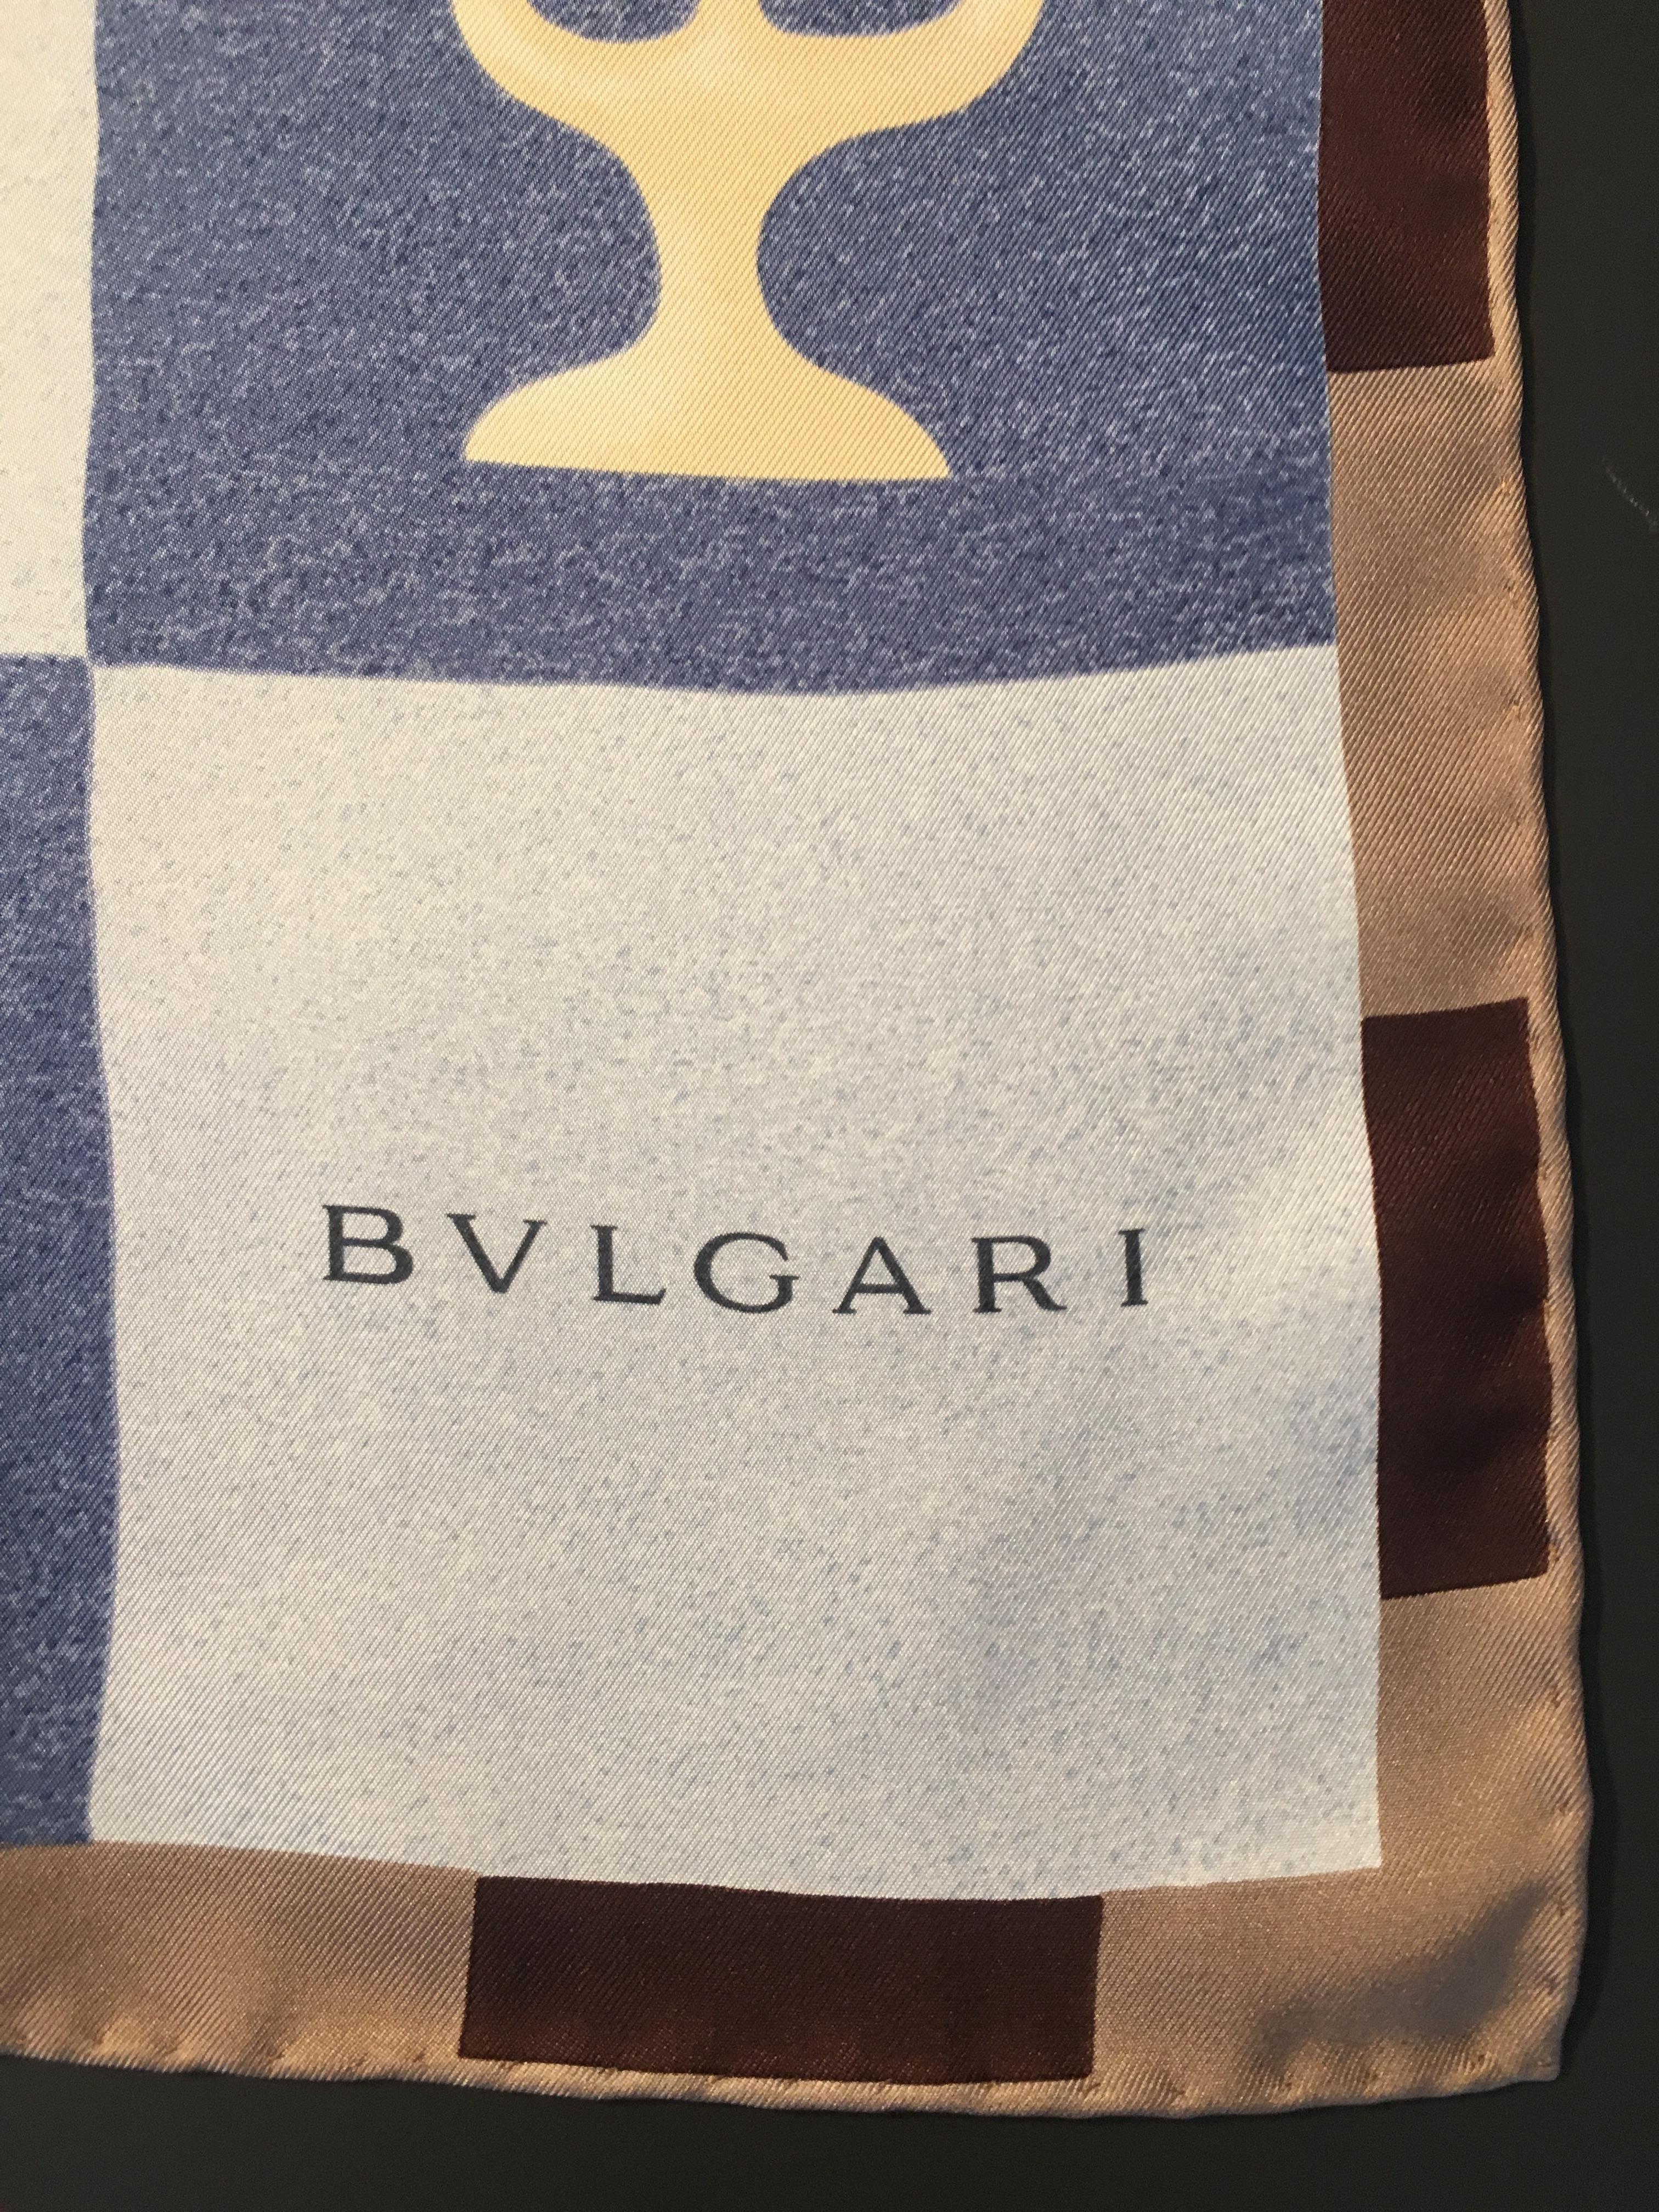 Bvlgari by Davide Pizzigoni silk whimsical scarf.
34